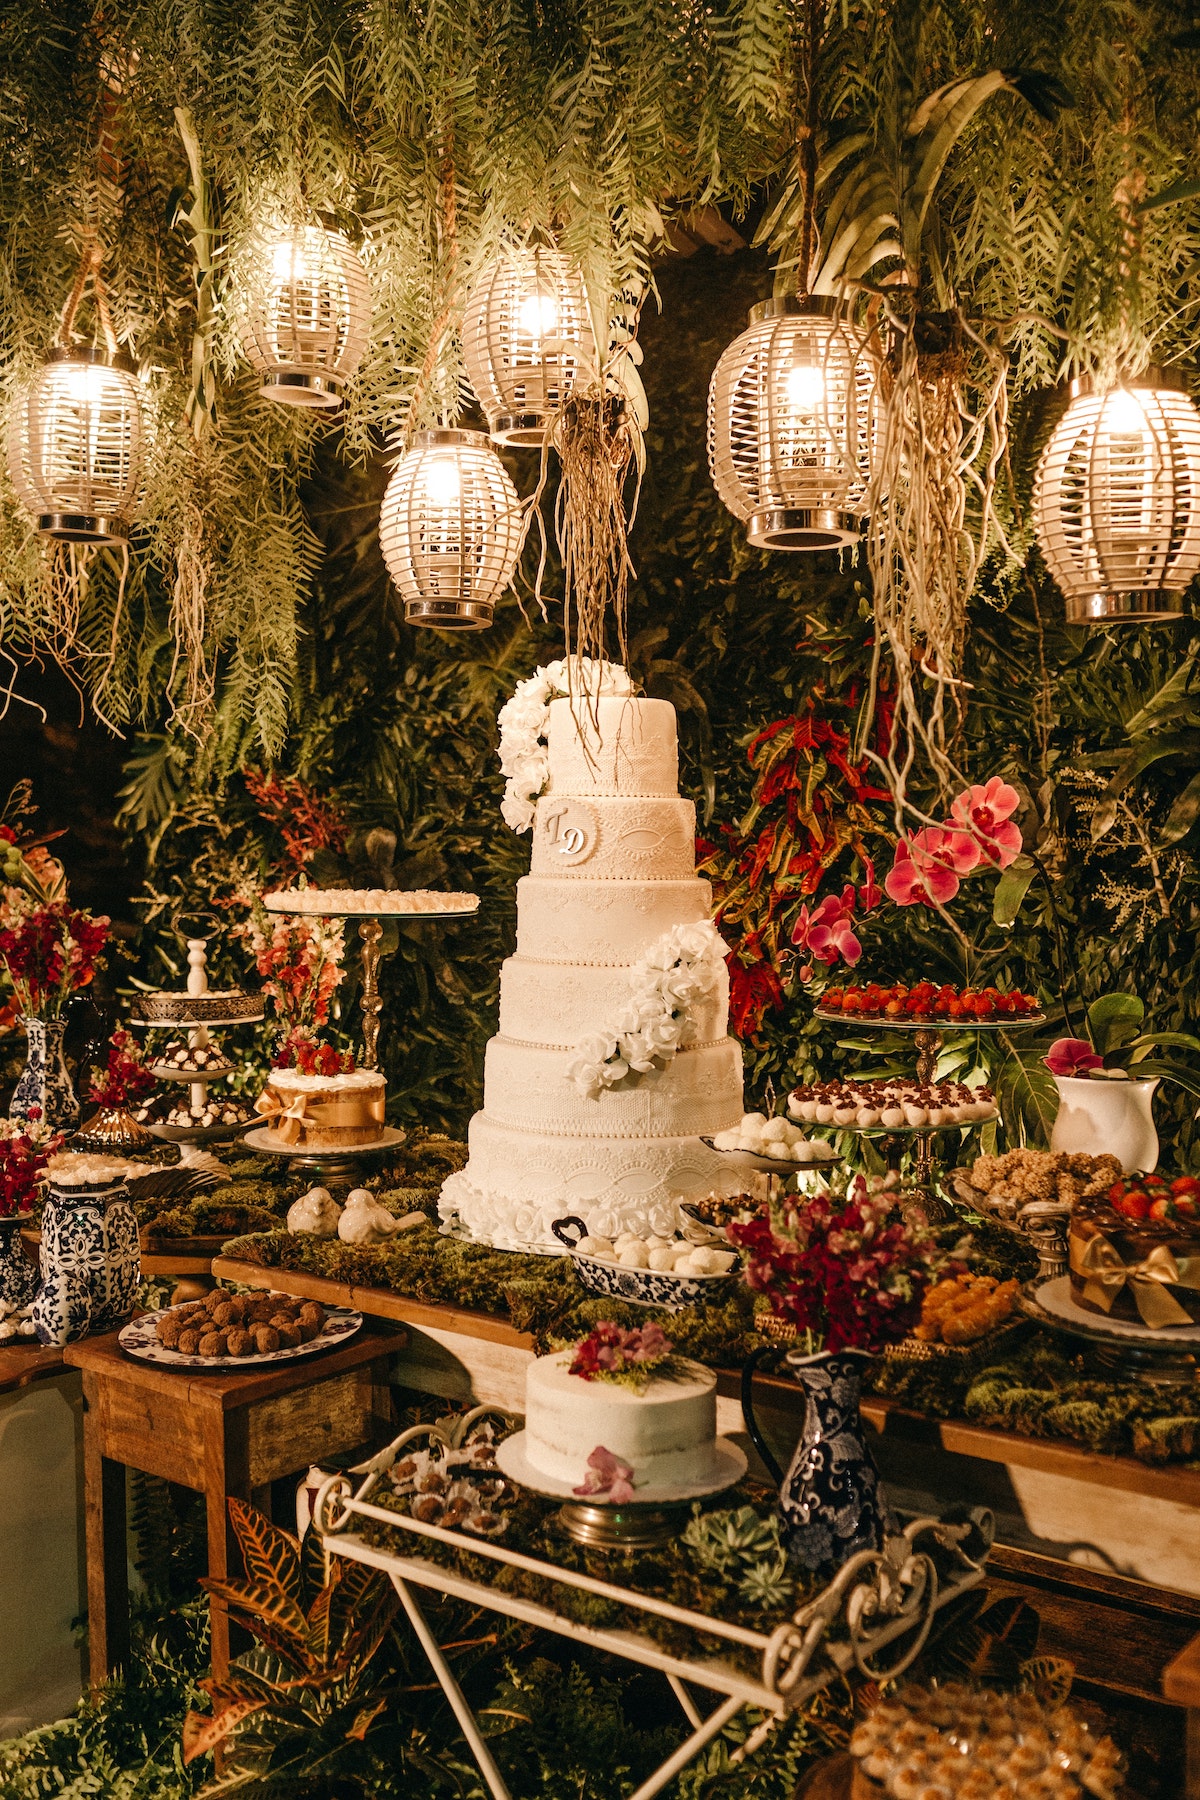 tropical wedding cake - Traditional Beach and Tropical Wedding Cakes